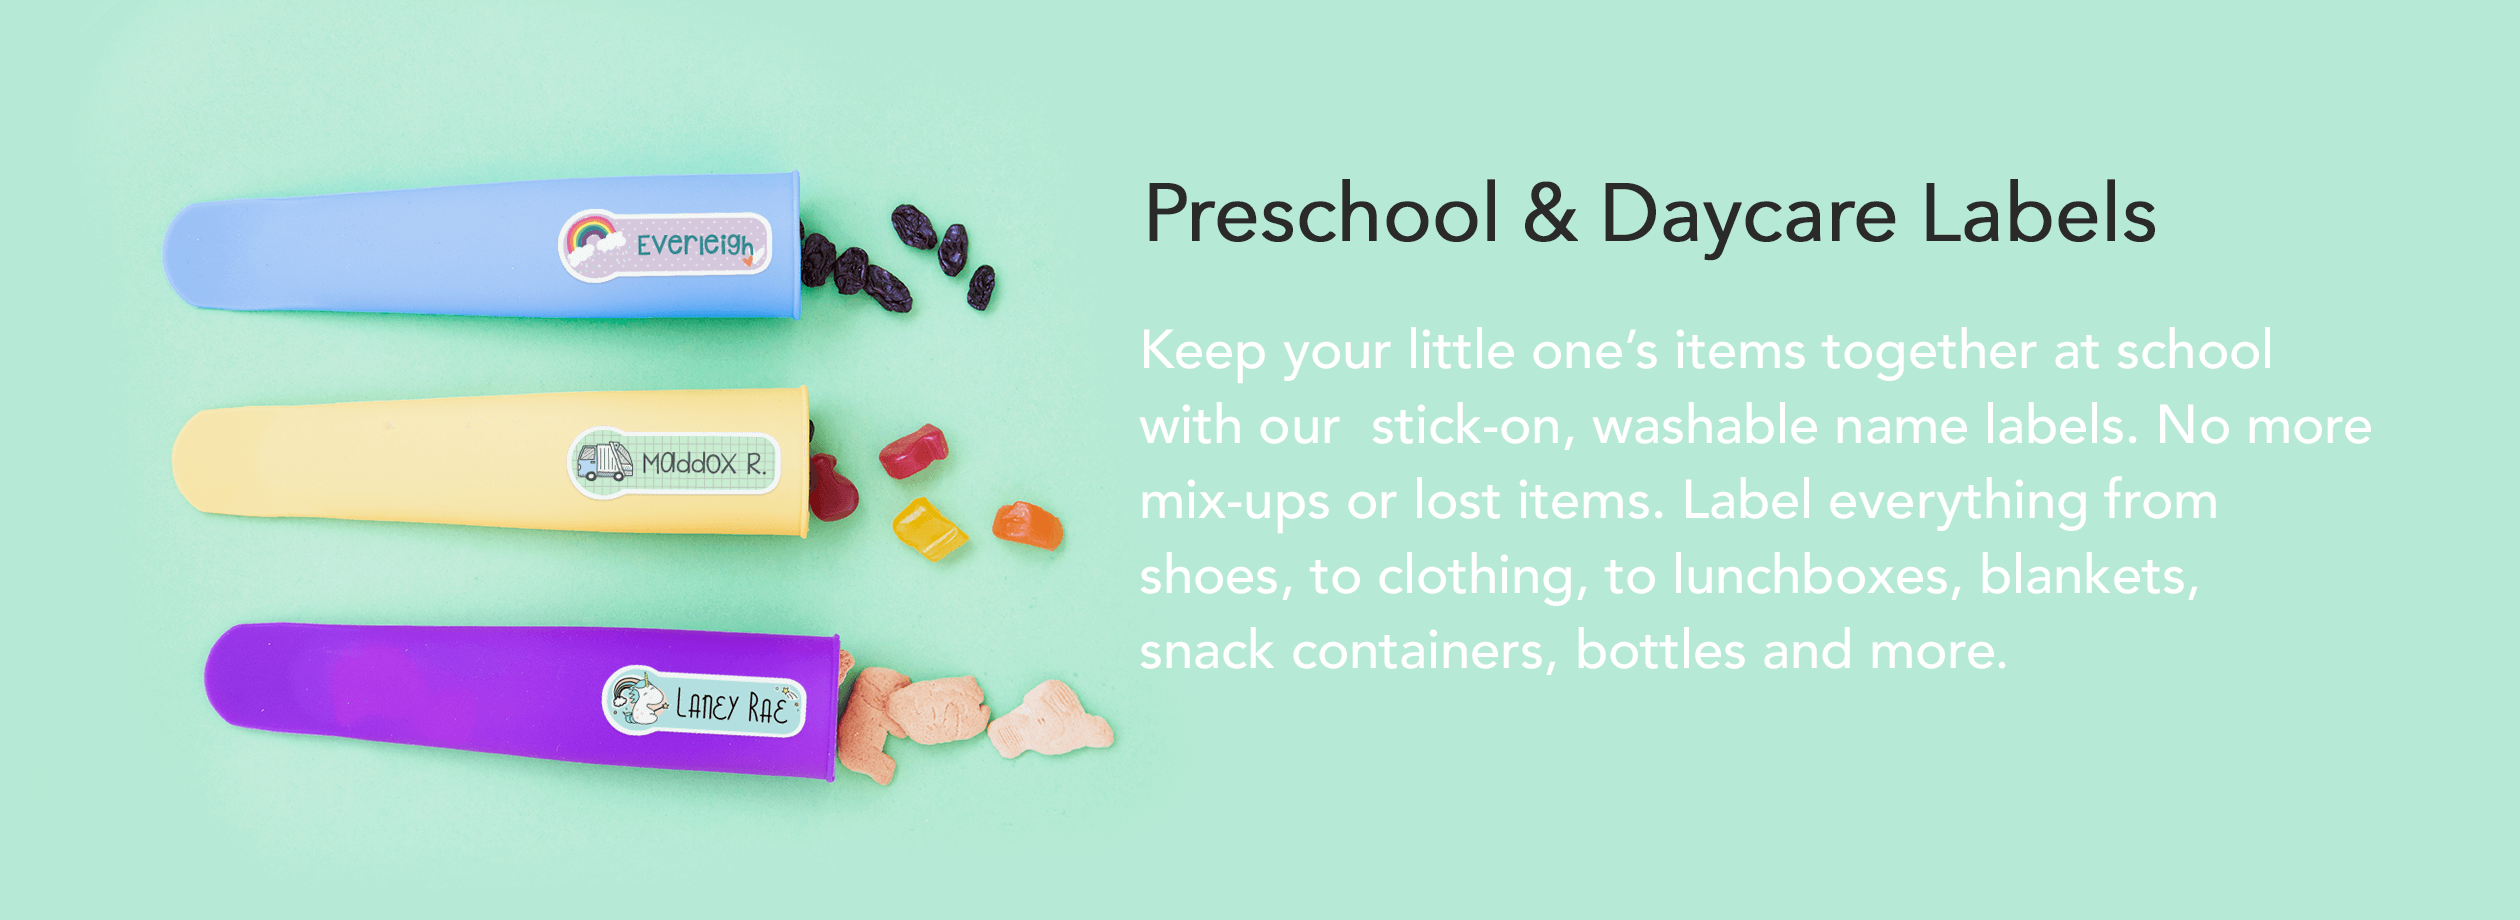 Little Kids Labels  Preschool & Daycare Labels & Stickers